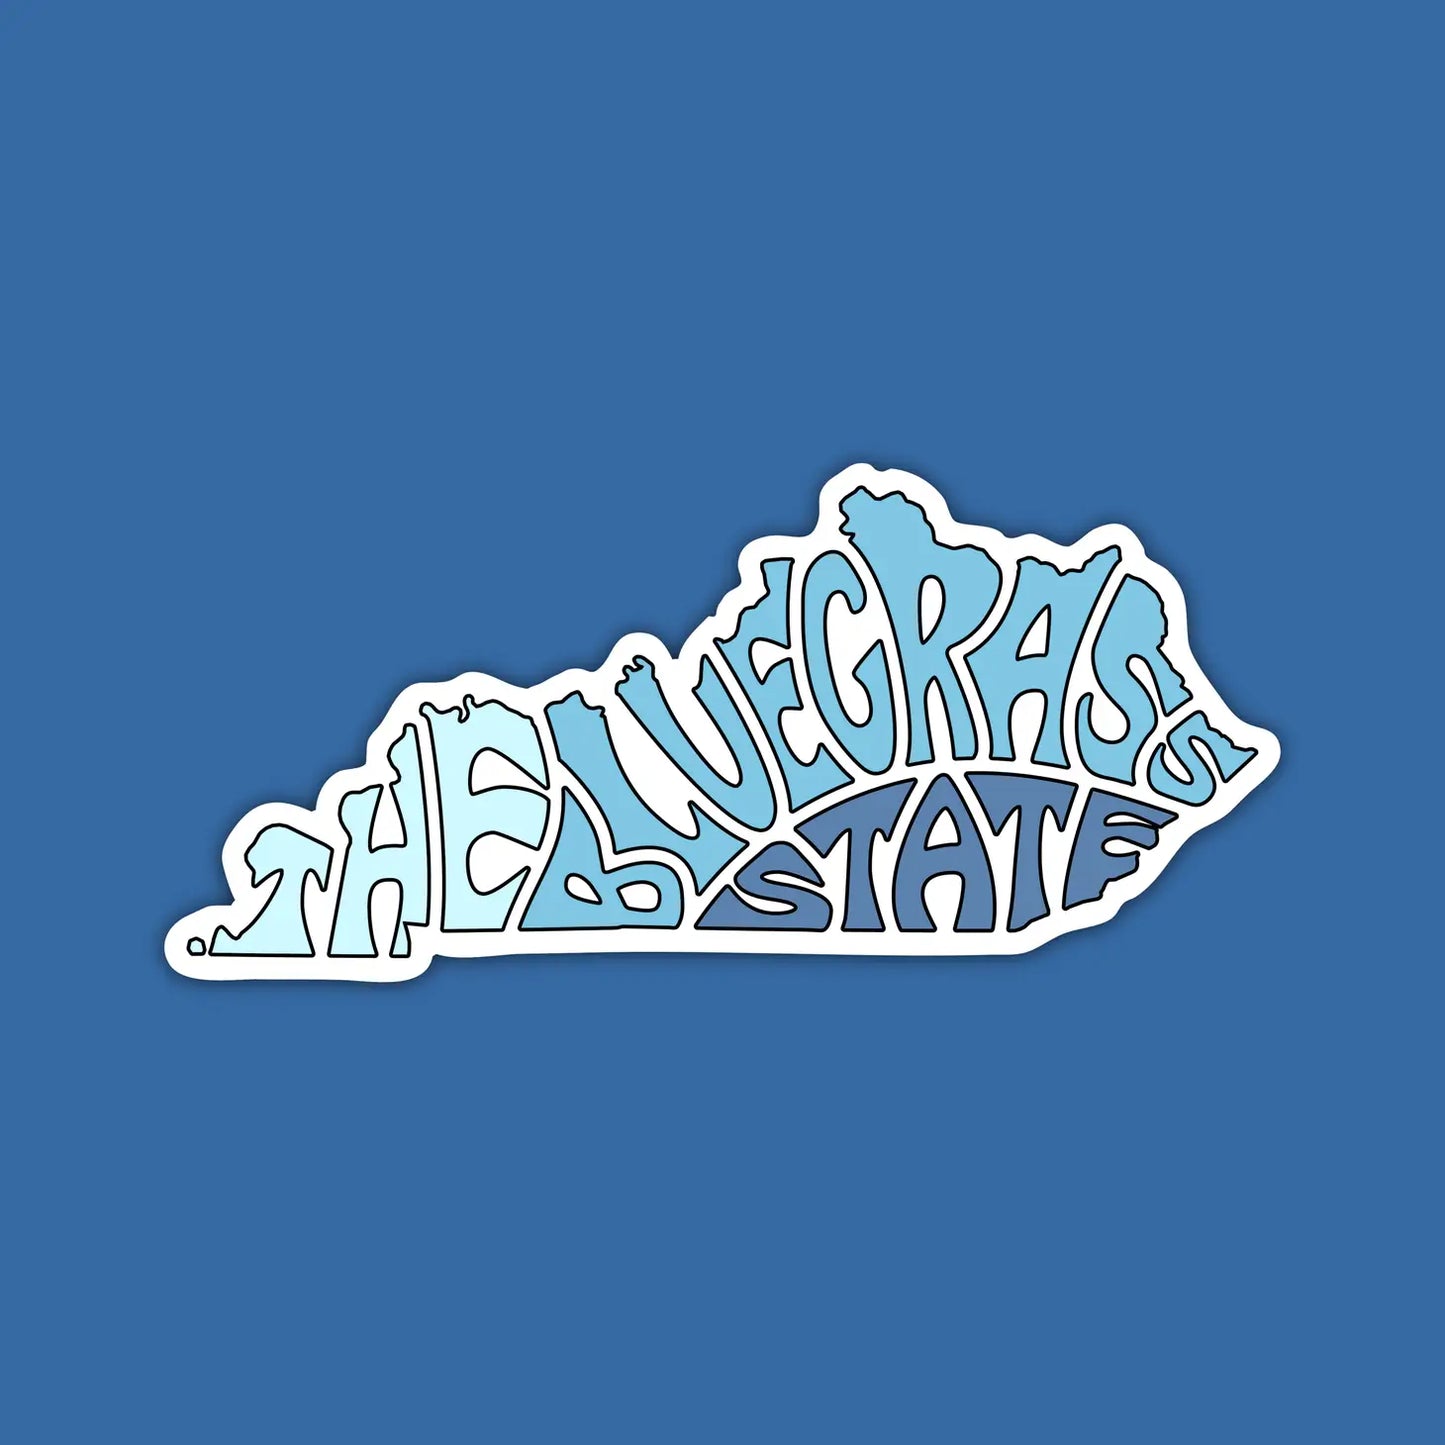 The Bluegrass State Sticker (Blue)